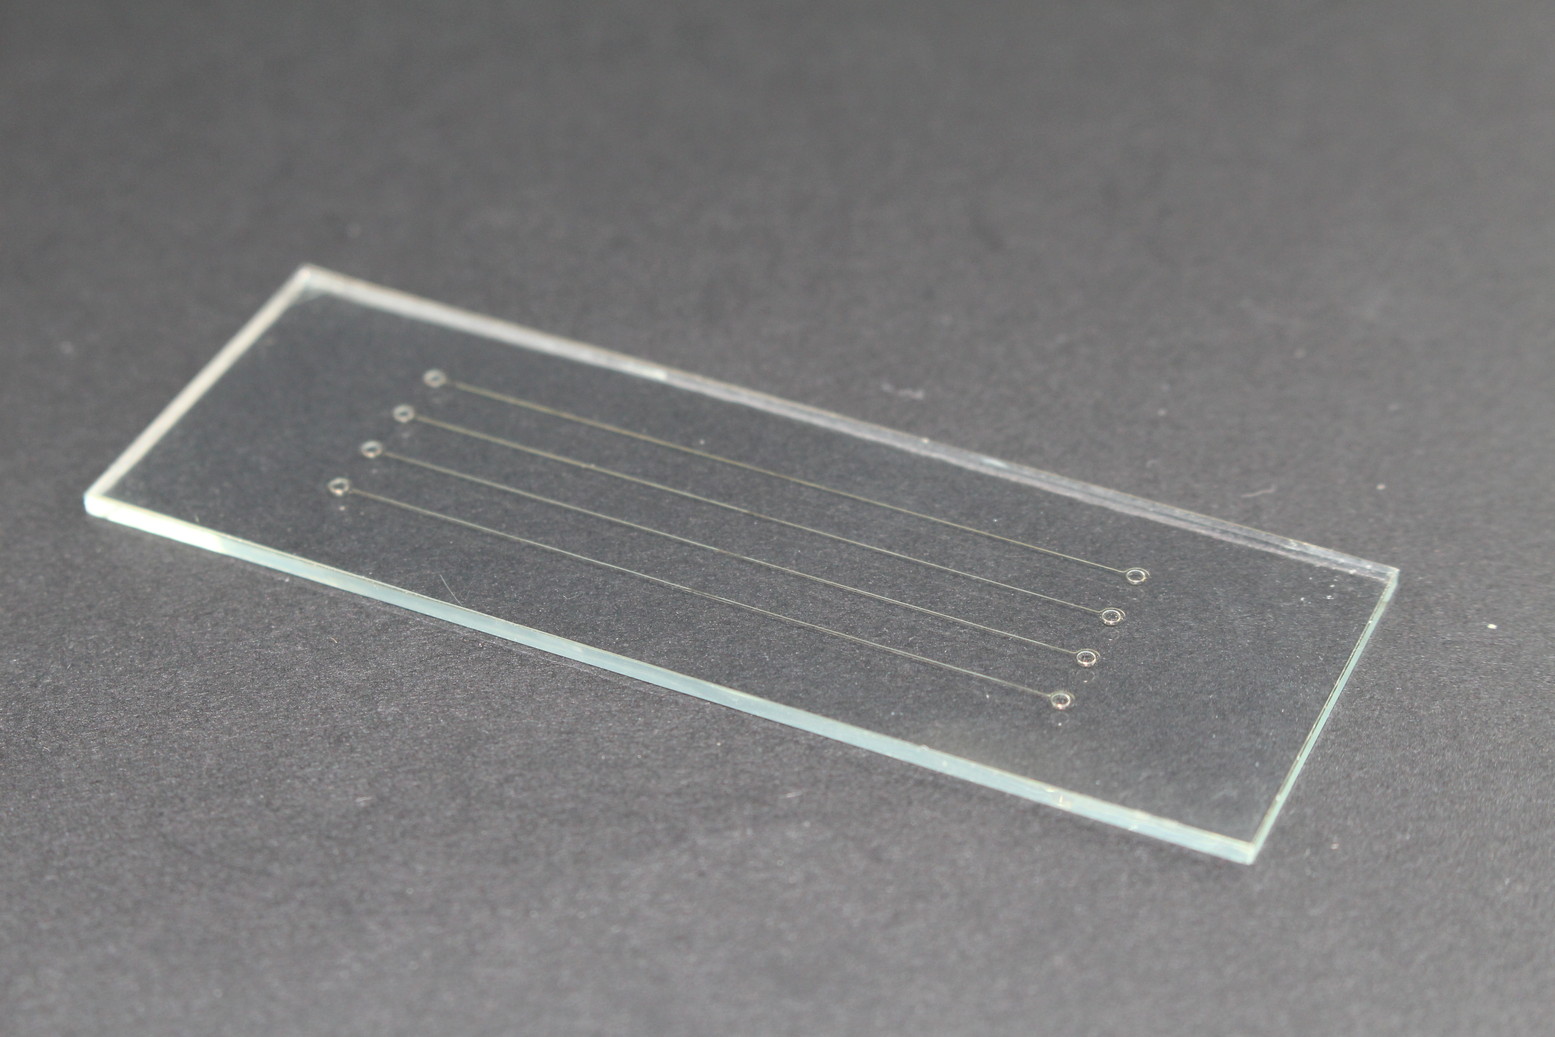 microfluidic chip